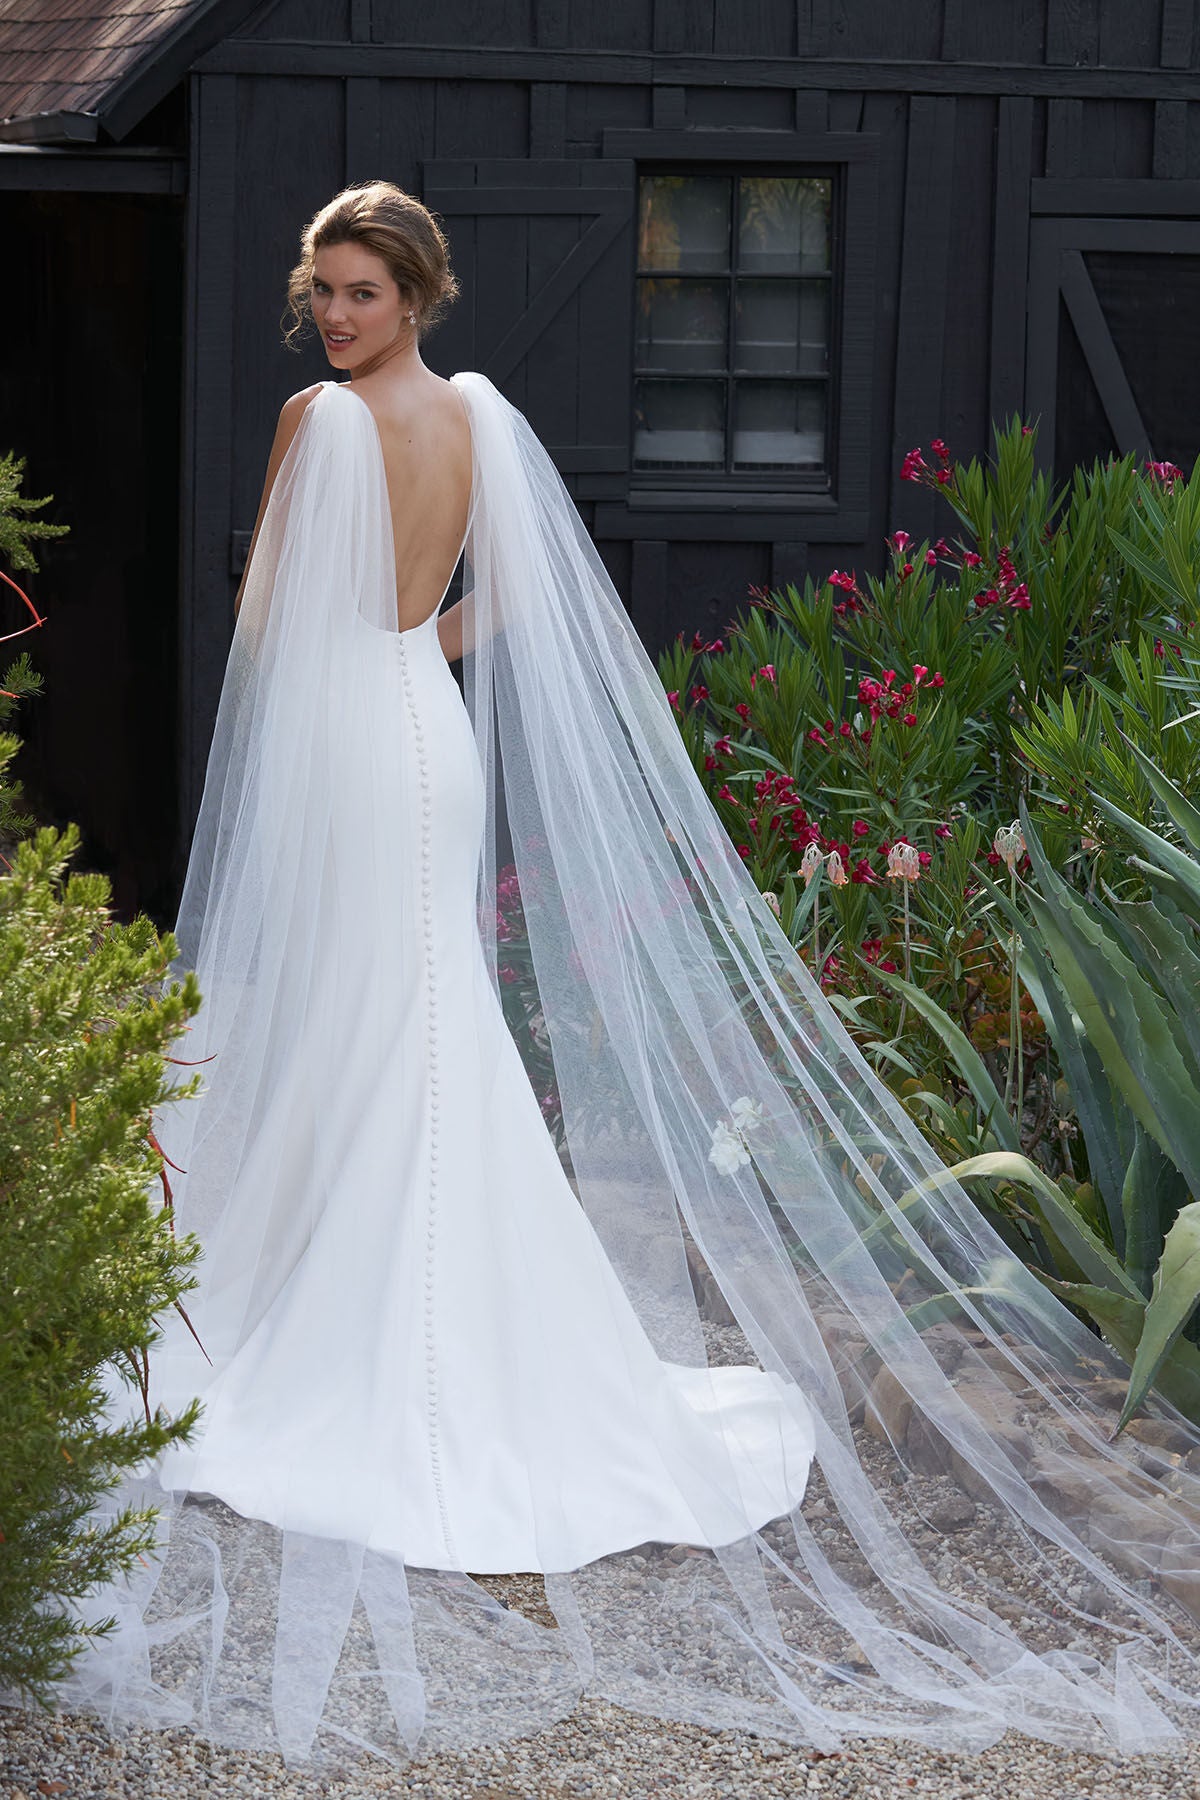 Bridal Wings Veil 2pc Shoulder Cape Veil Wedding Cloak – TulleLux Bridal  Crowns u0026 Accessories